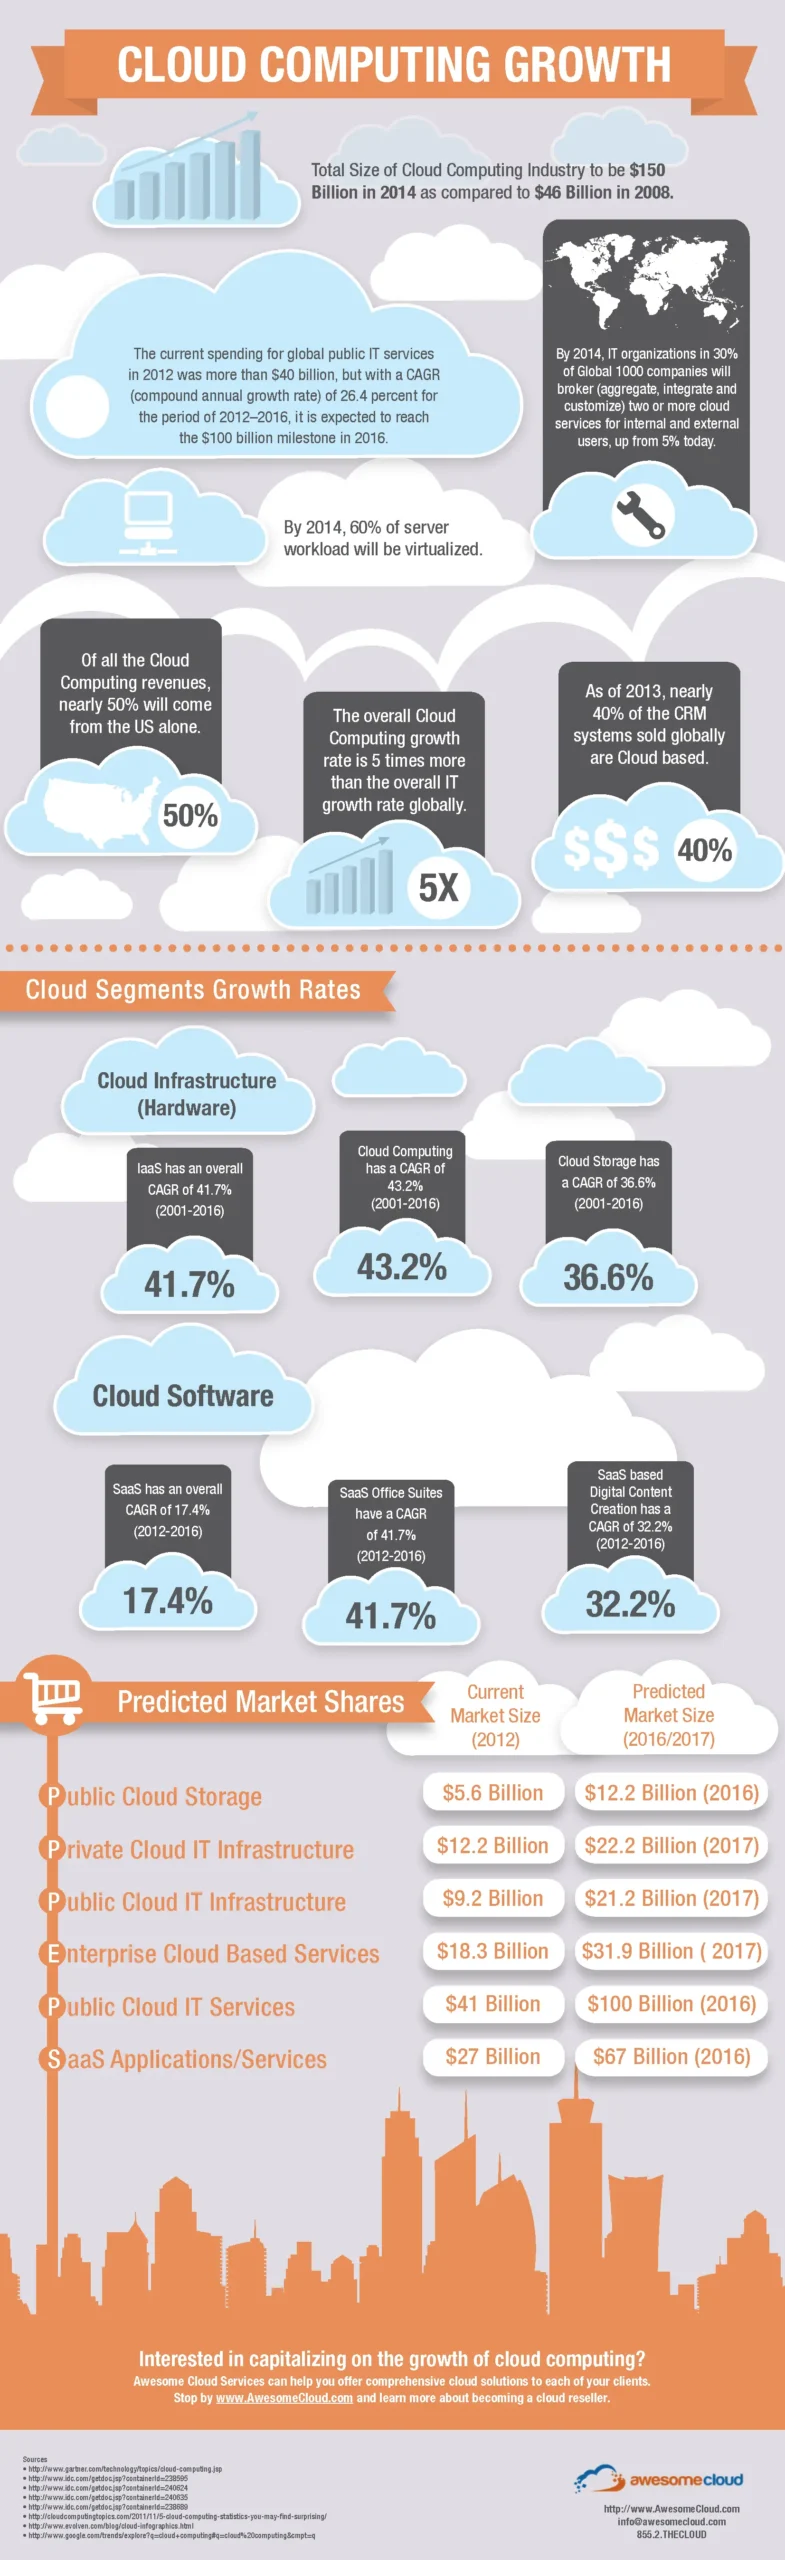 Cloud Computing Growth Statistics
